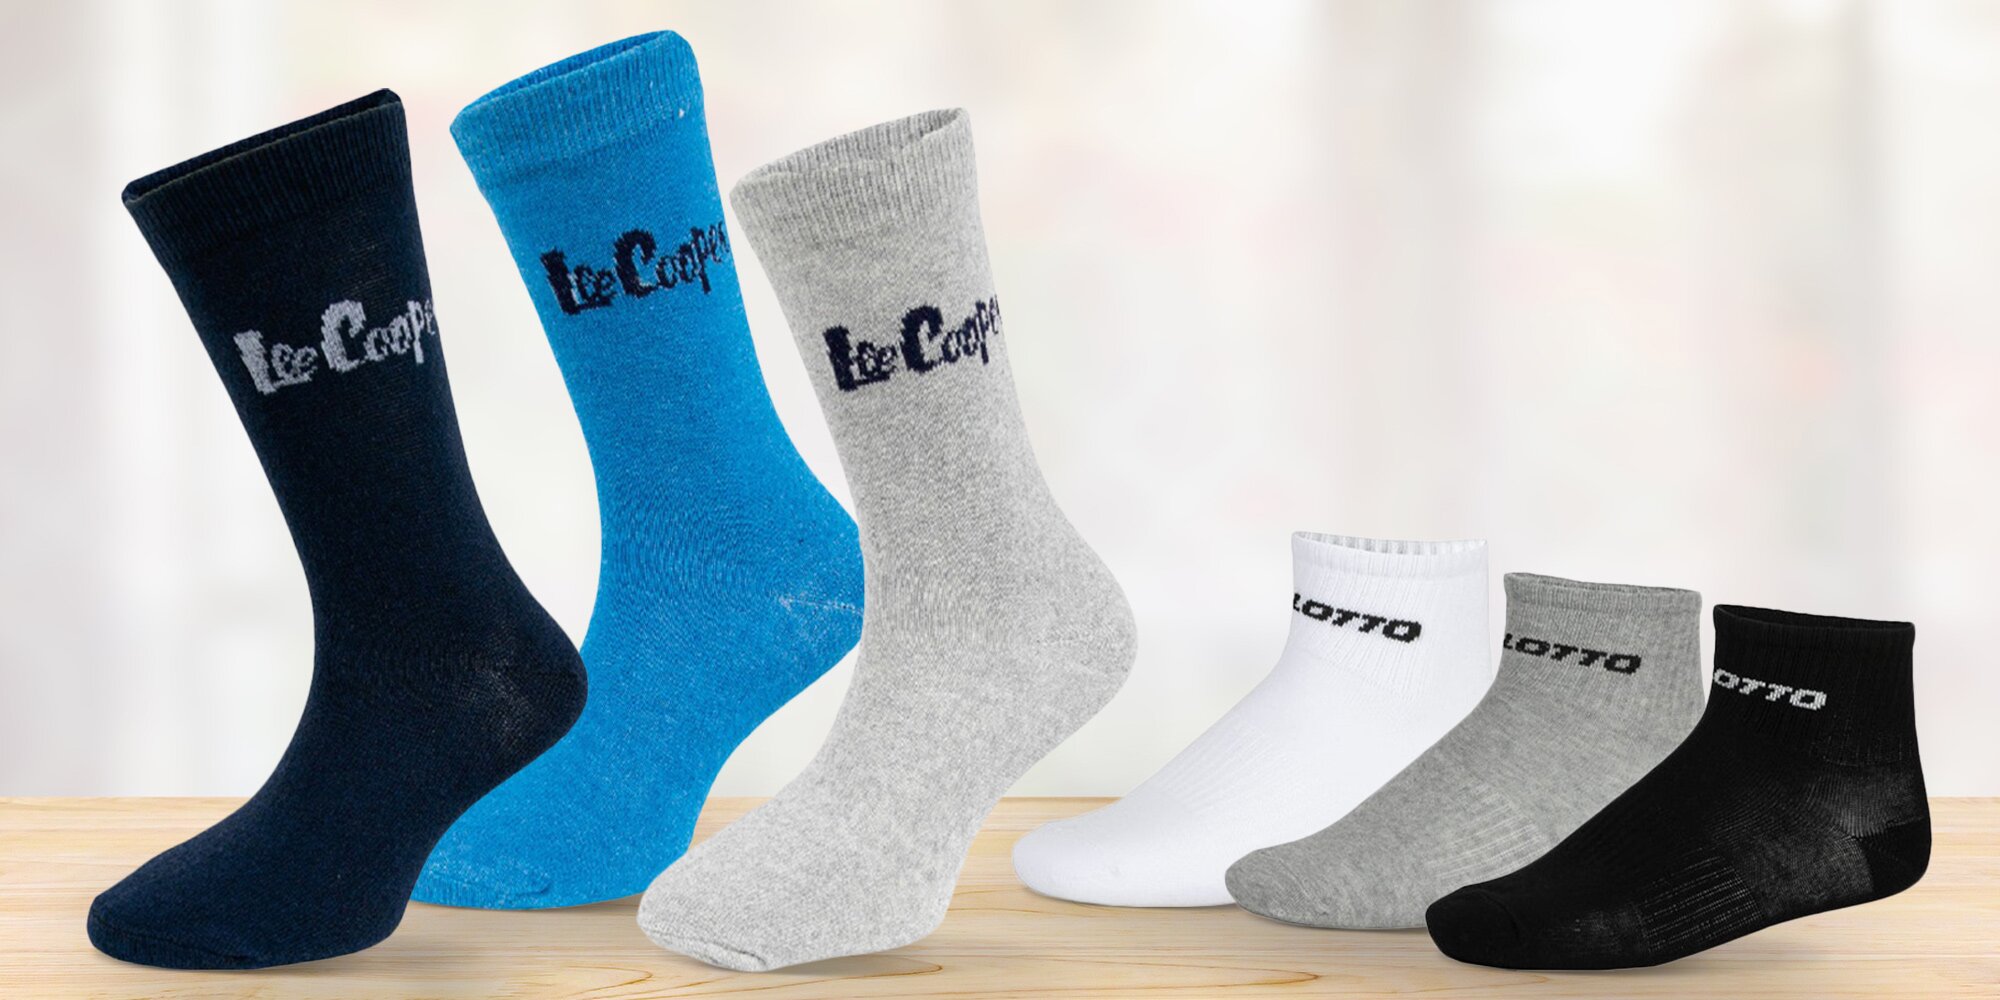 Ponožky Lee Cooper, Lotto a Kappa po 2 i 3 párech